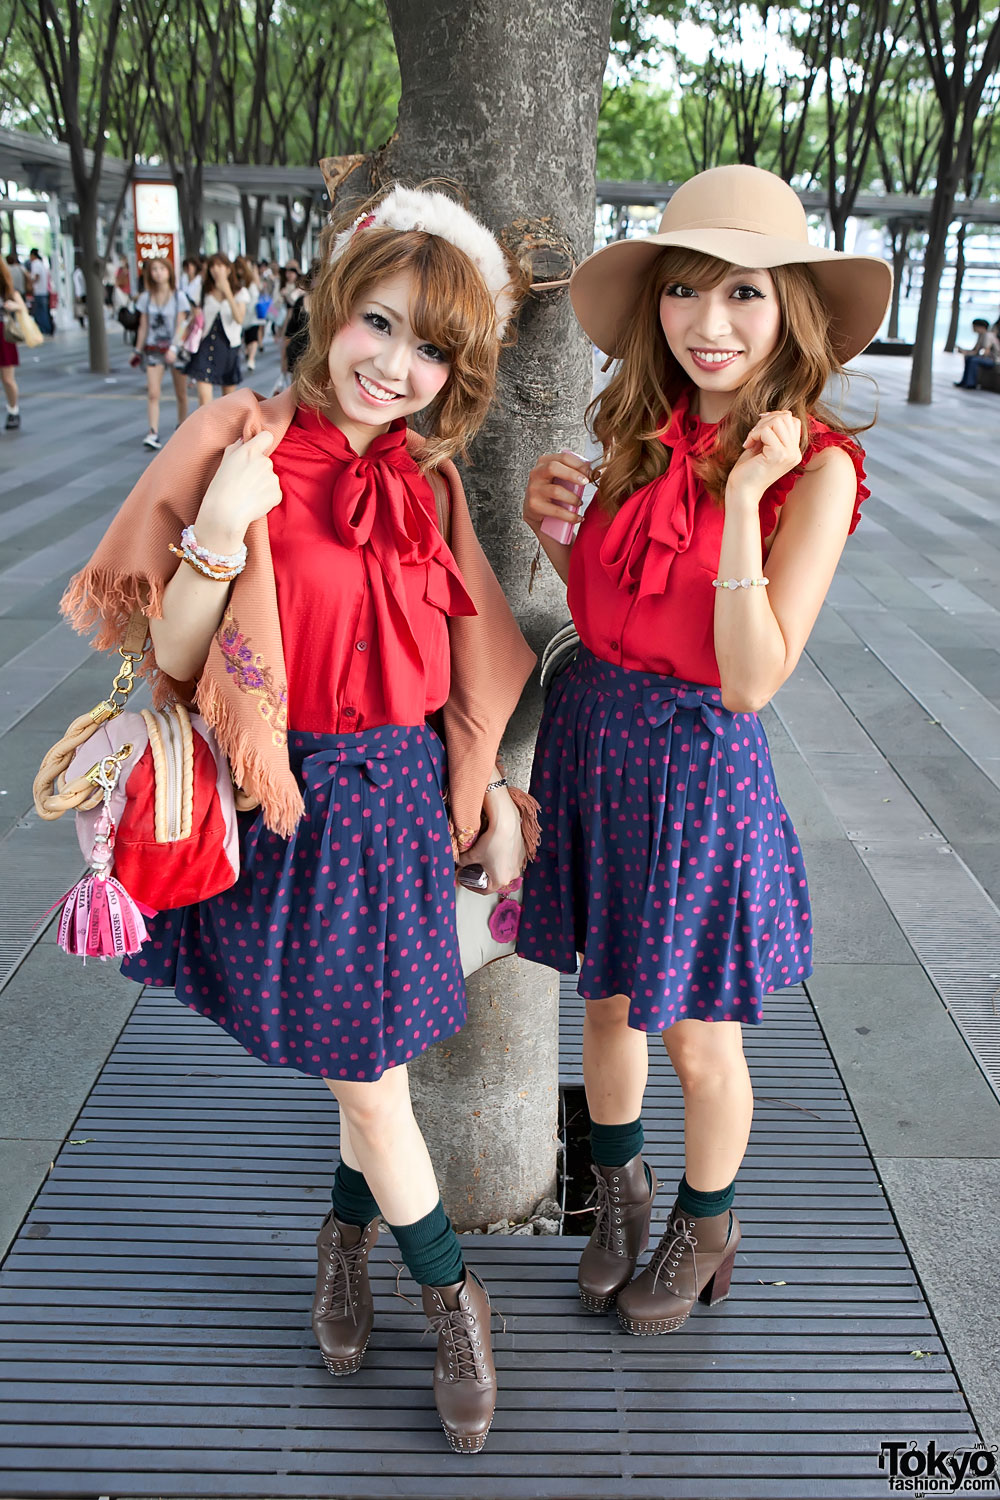 Tokyo girls : source http://bit.ly/13PDz3Y